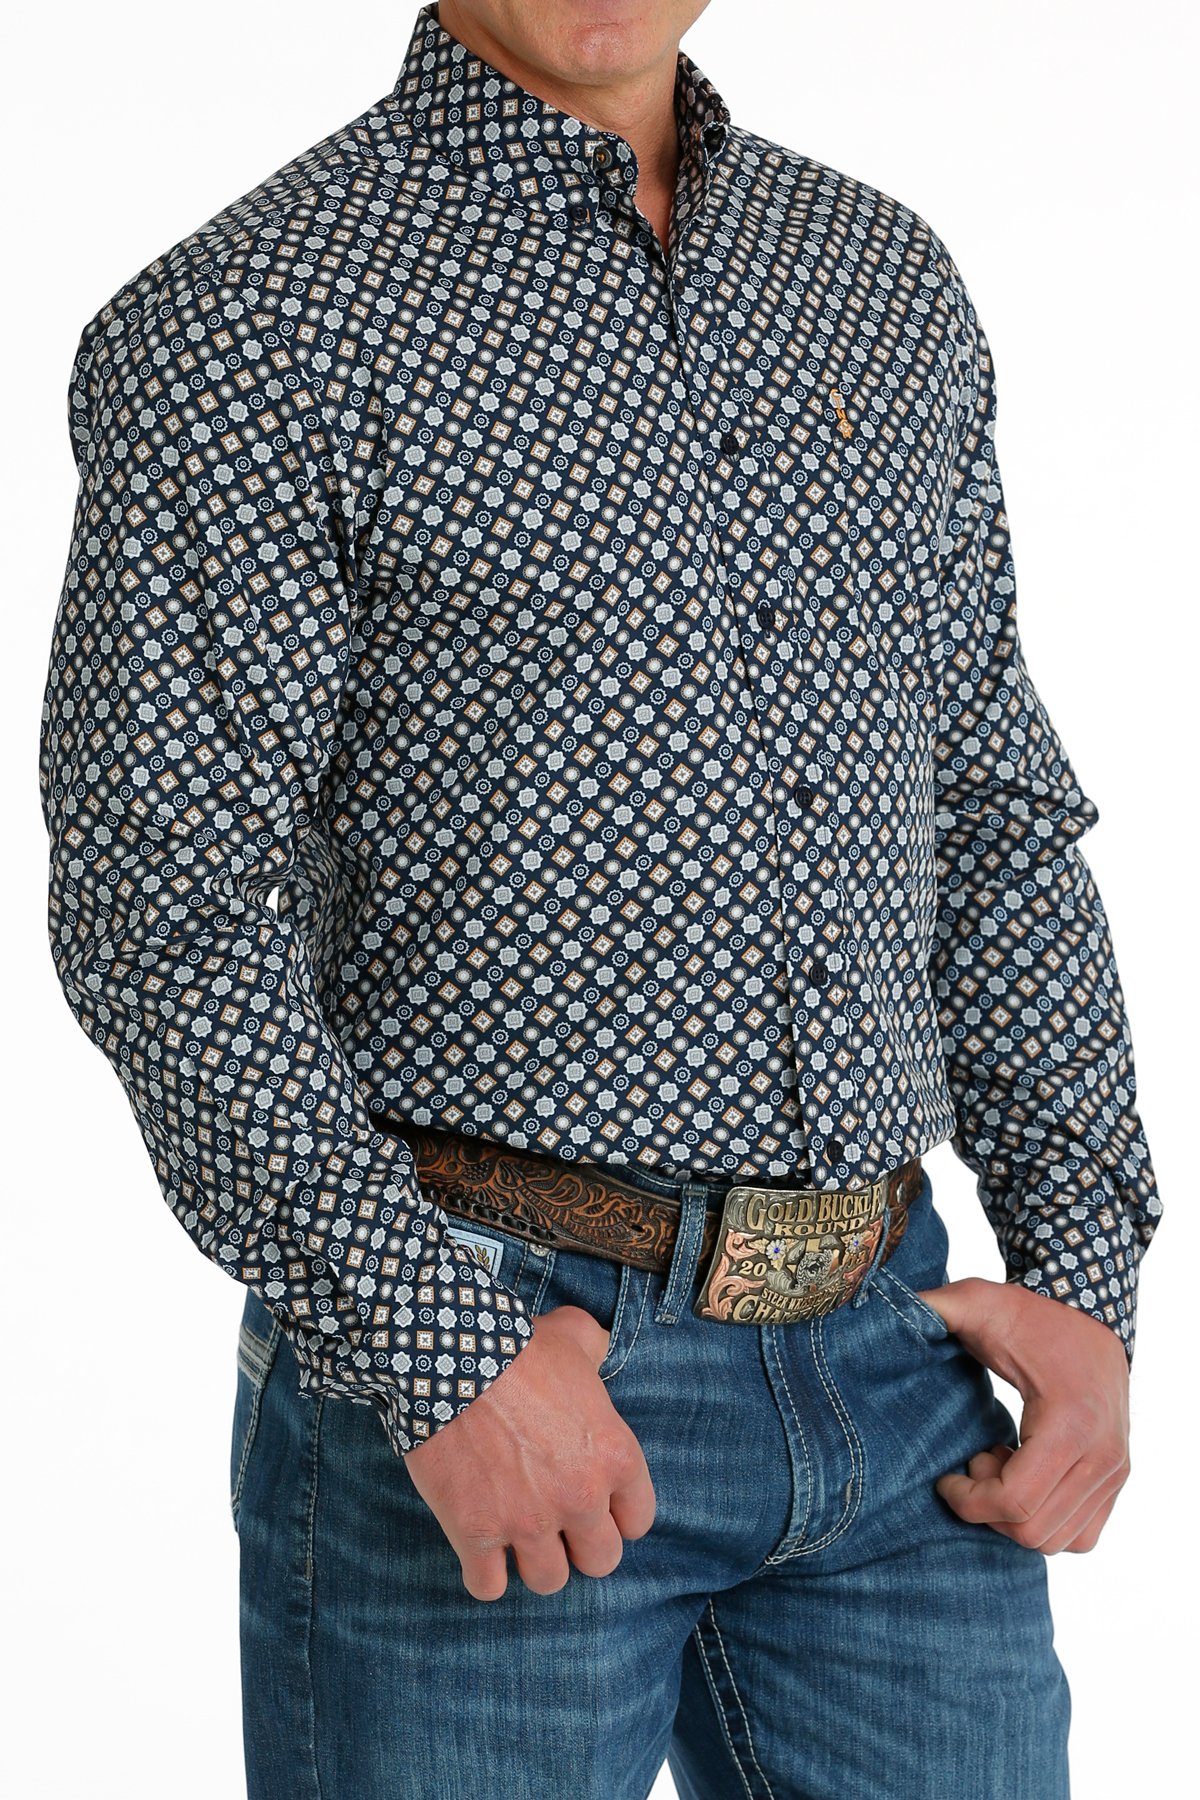 chemise-equitation-western-homme-cinch-a-motif-marine-3